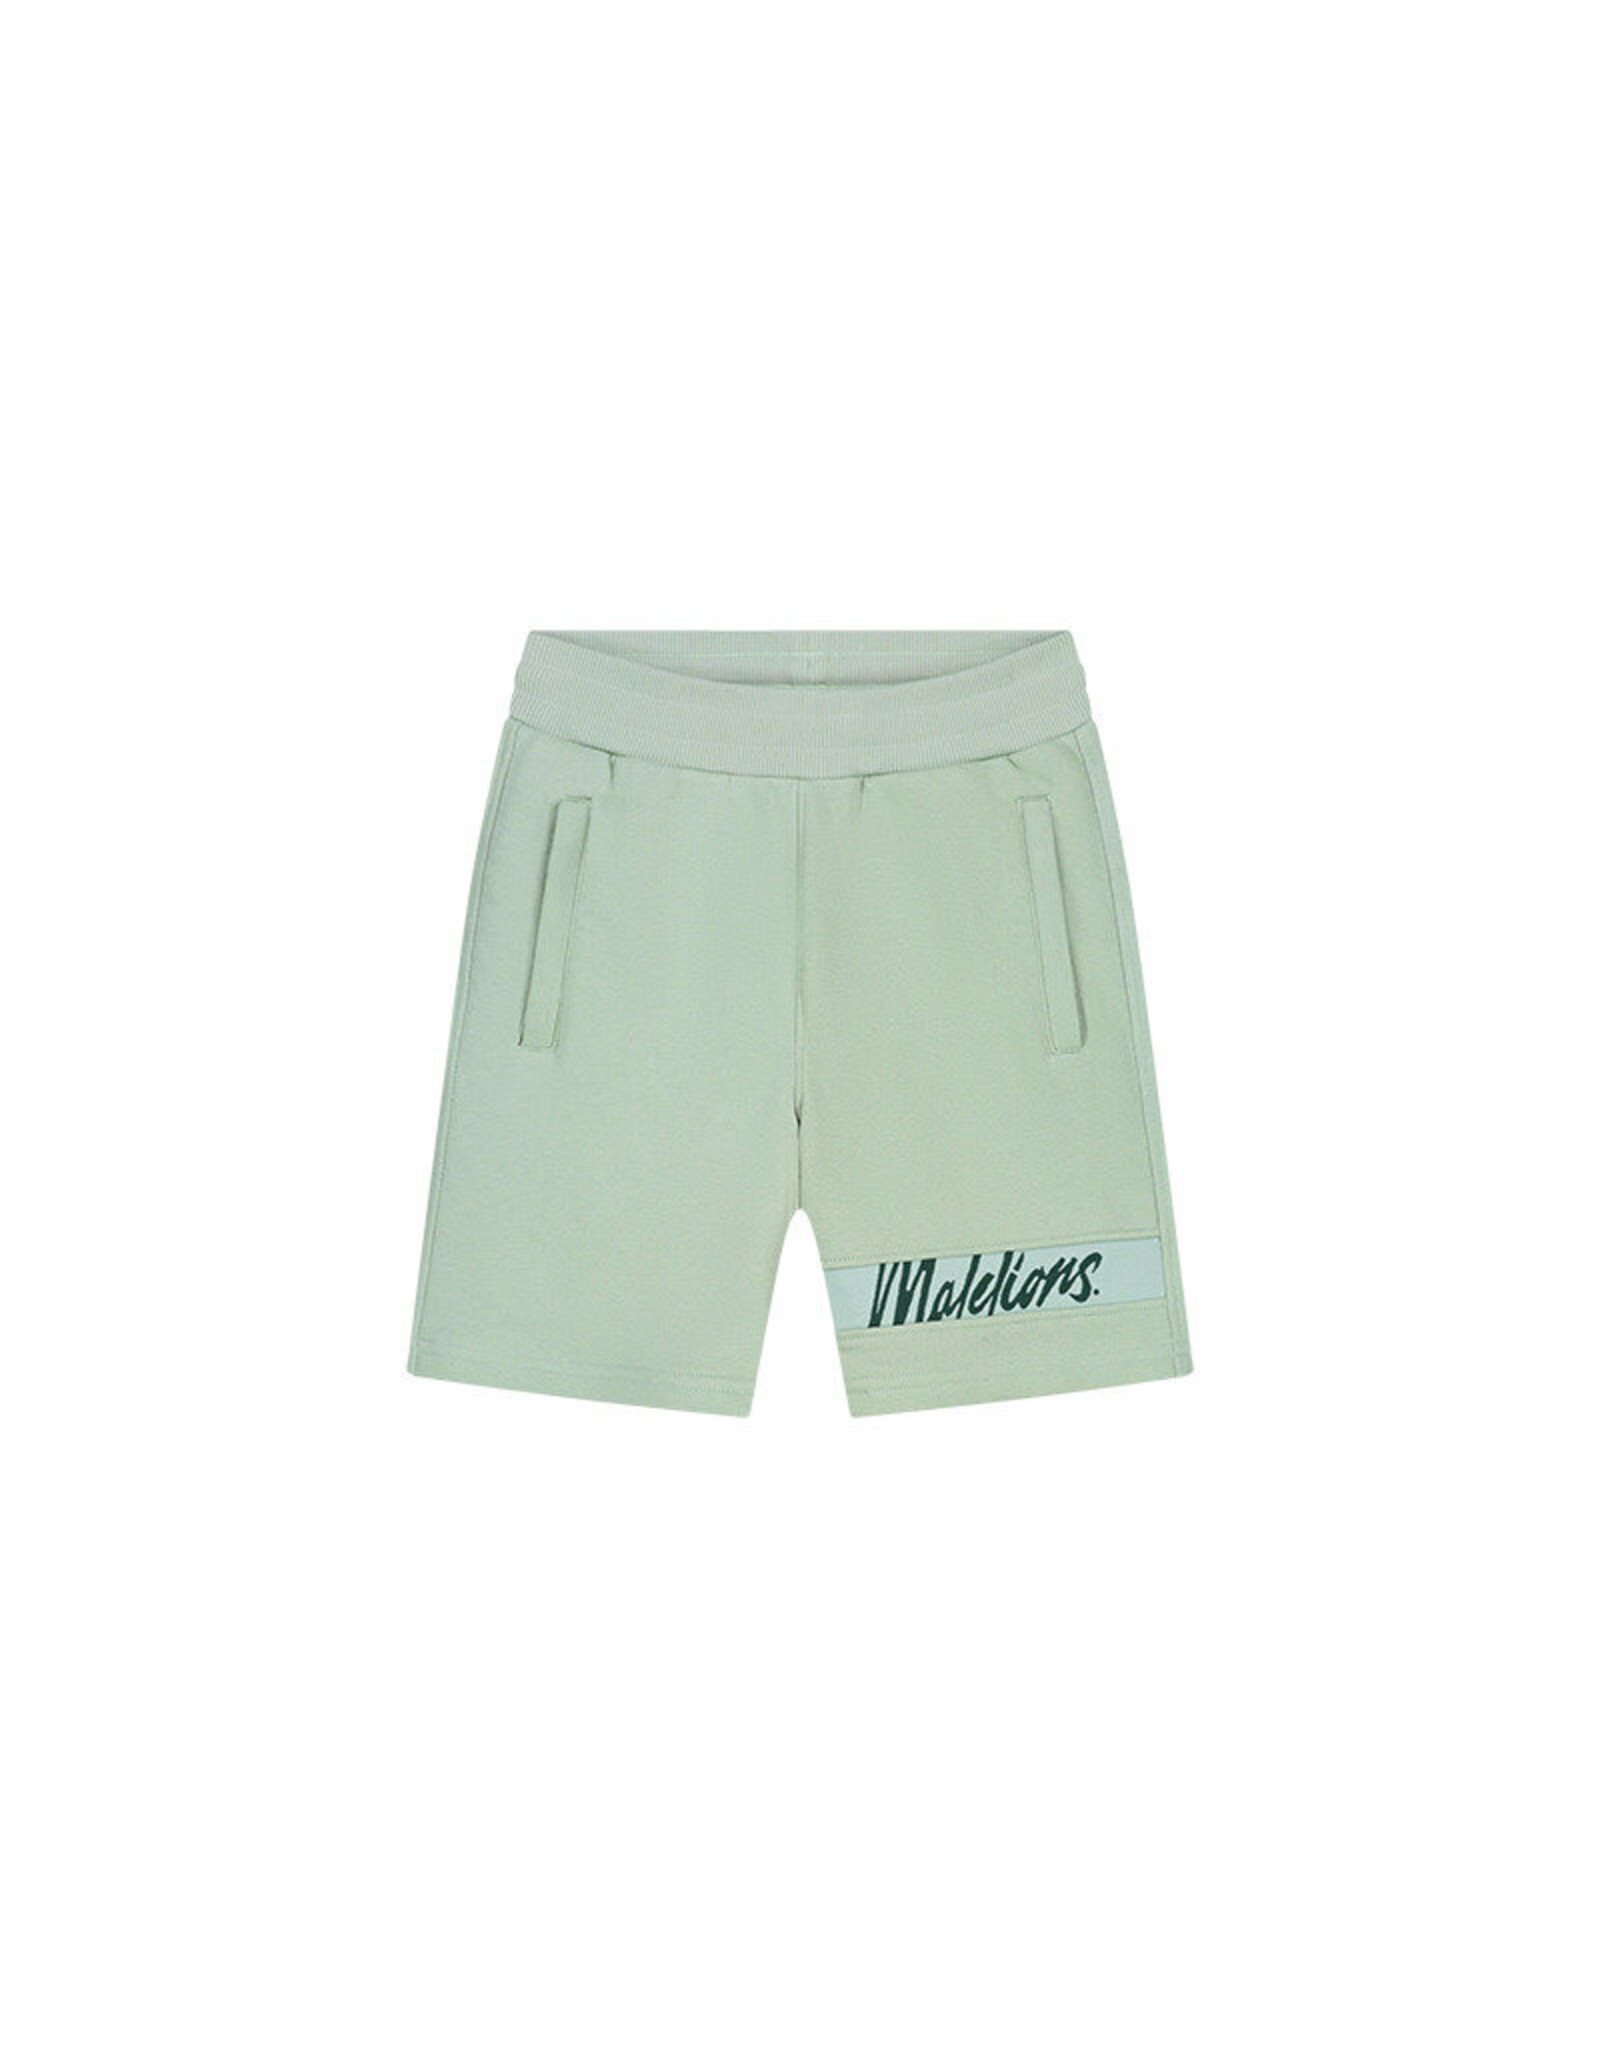 Malelions Malelions Junior Captain Shorts 2.0 Aqua Grey/Mint MJ1-SS24-27